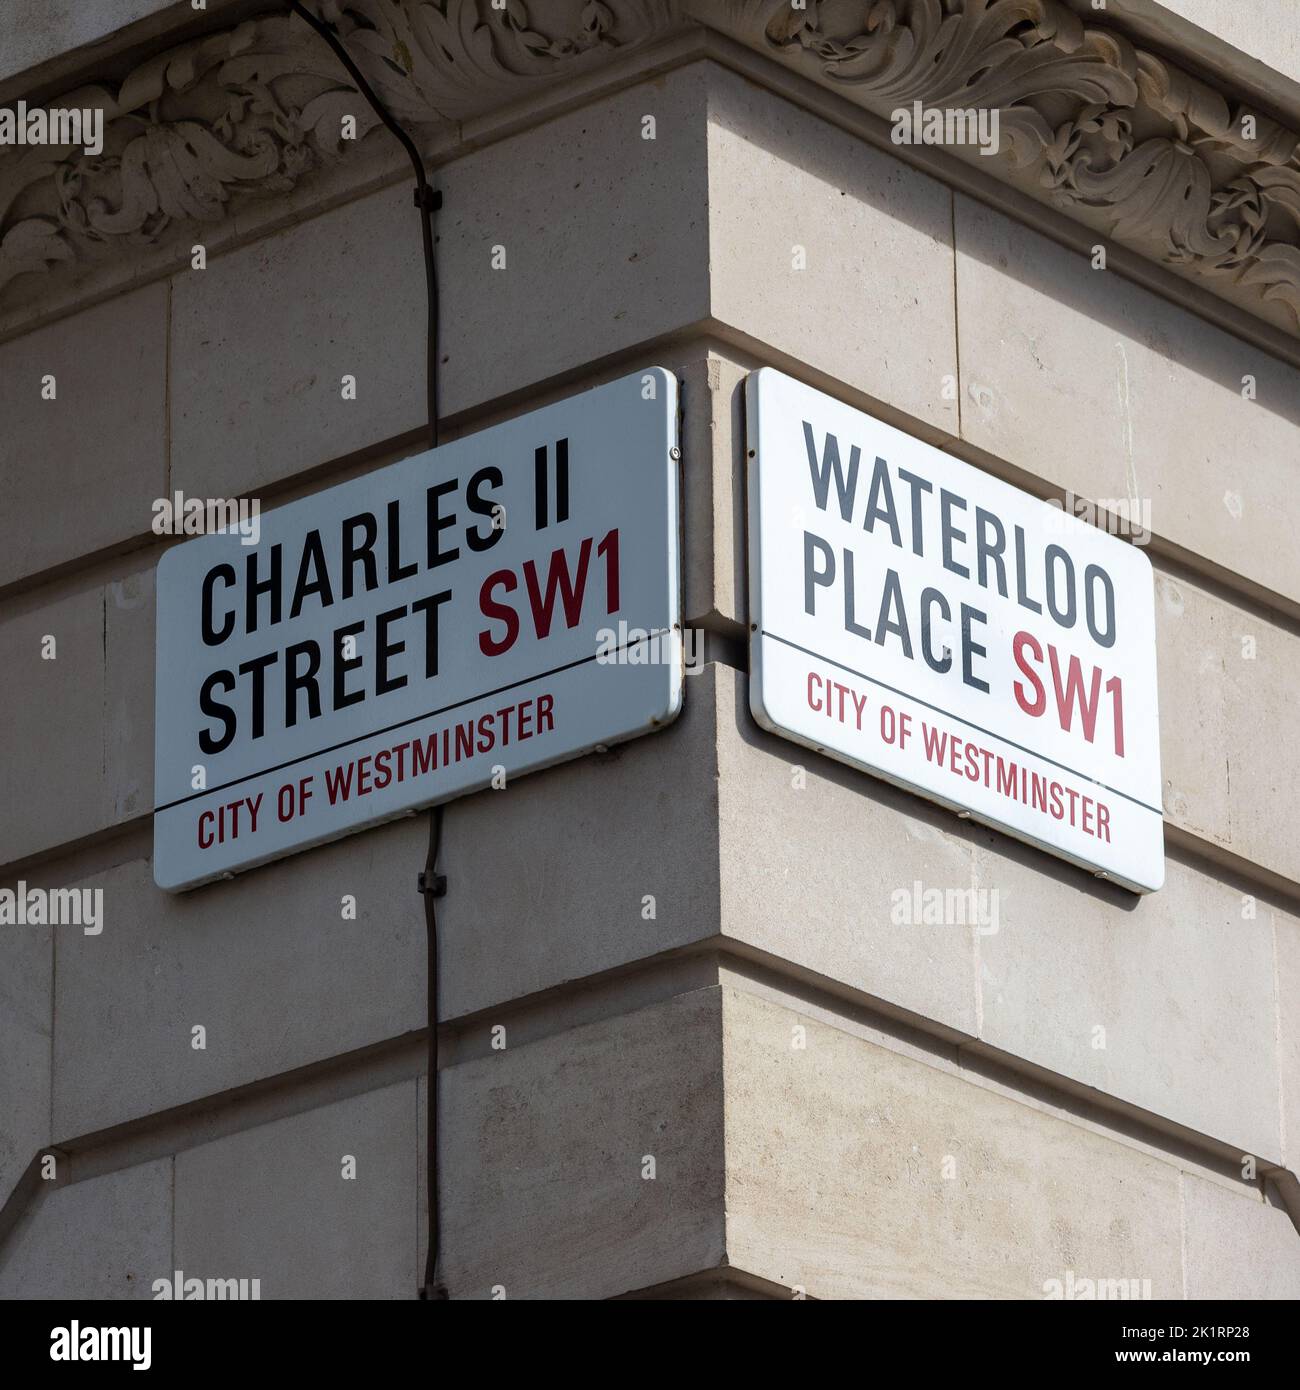 Charles II and Waterloo Place street names, London, UK Stock Photo